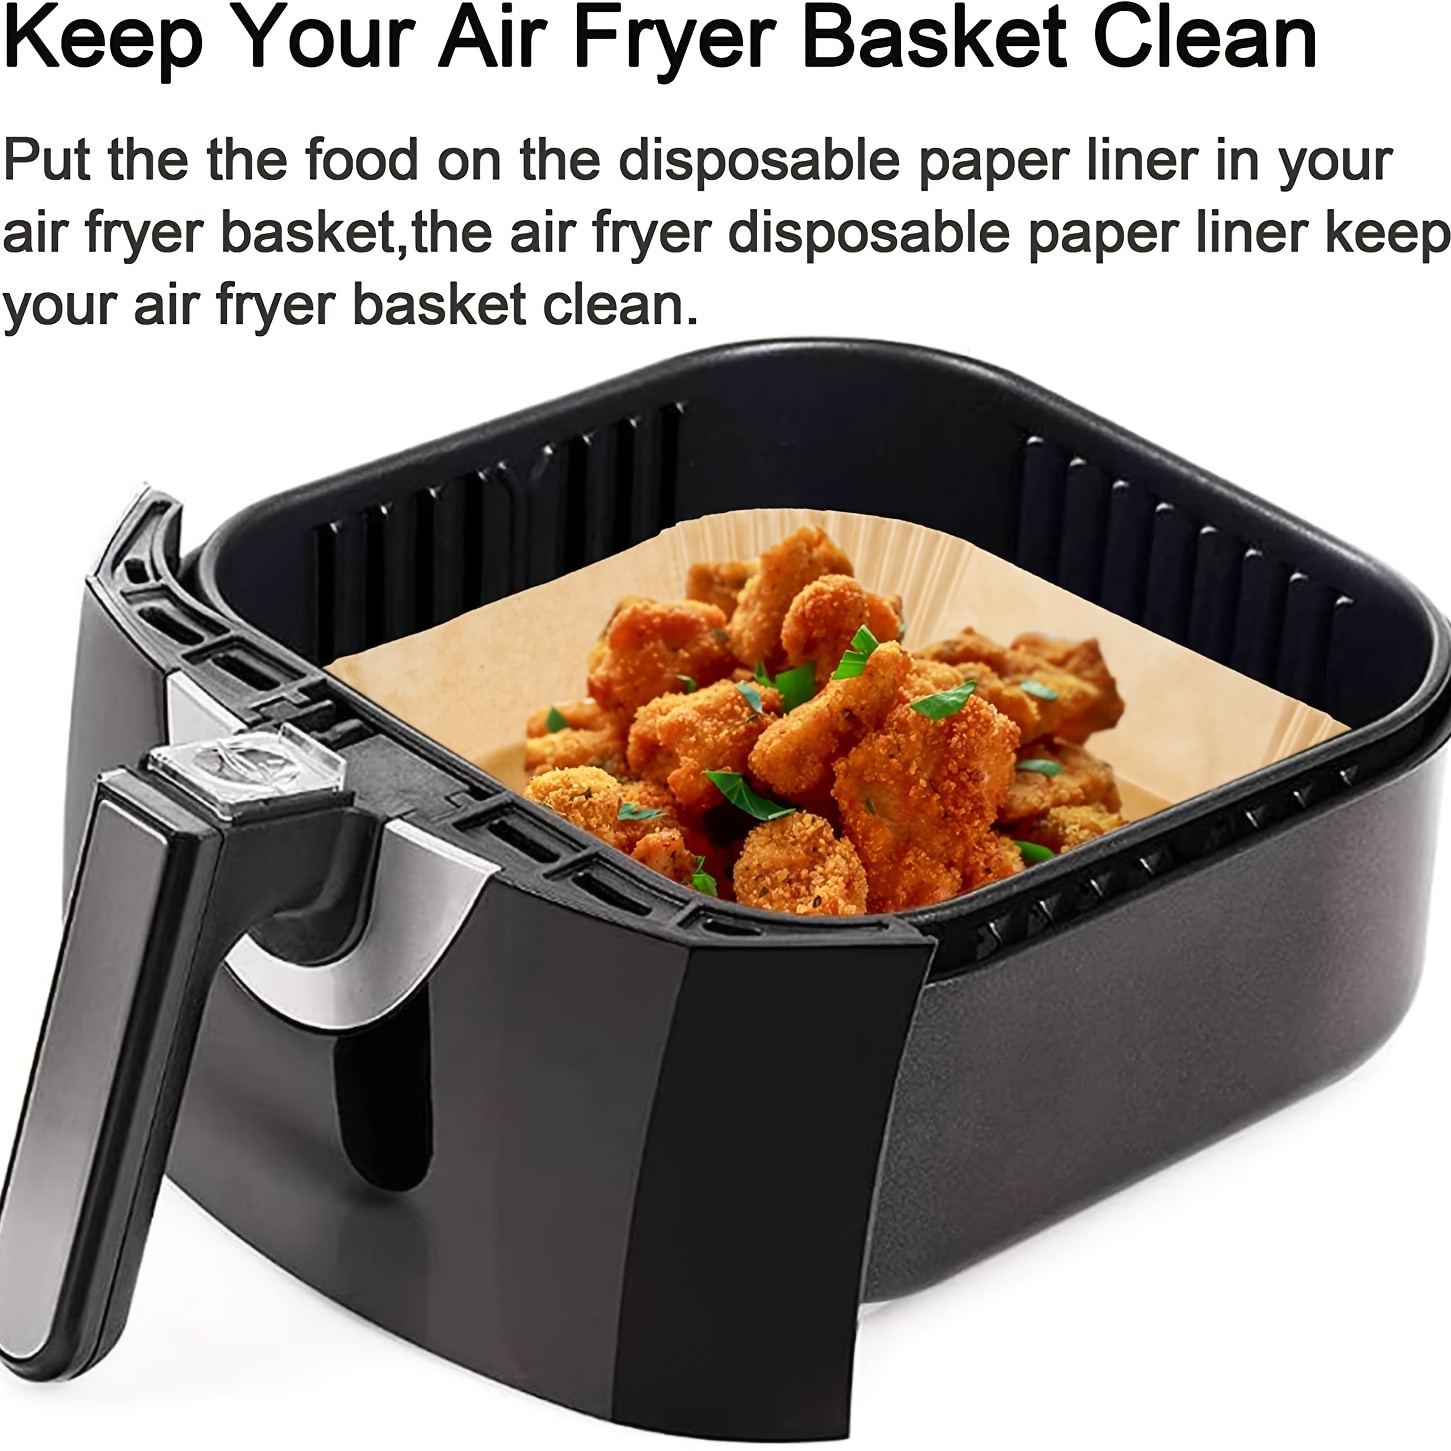 Air Fryer Disposable Paper Liner, Liners For Air Fryer, Fit 2-8 Qt